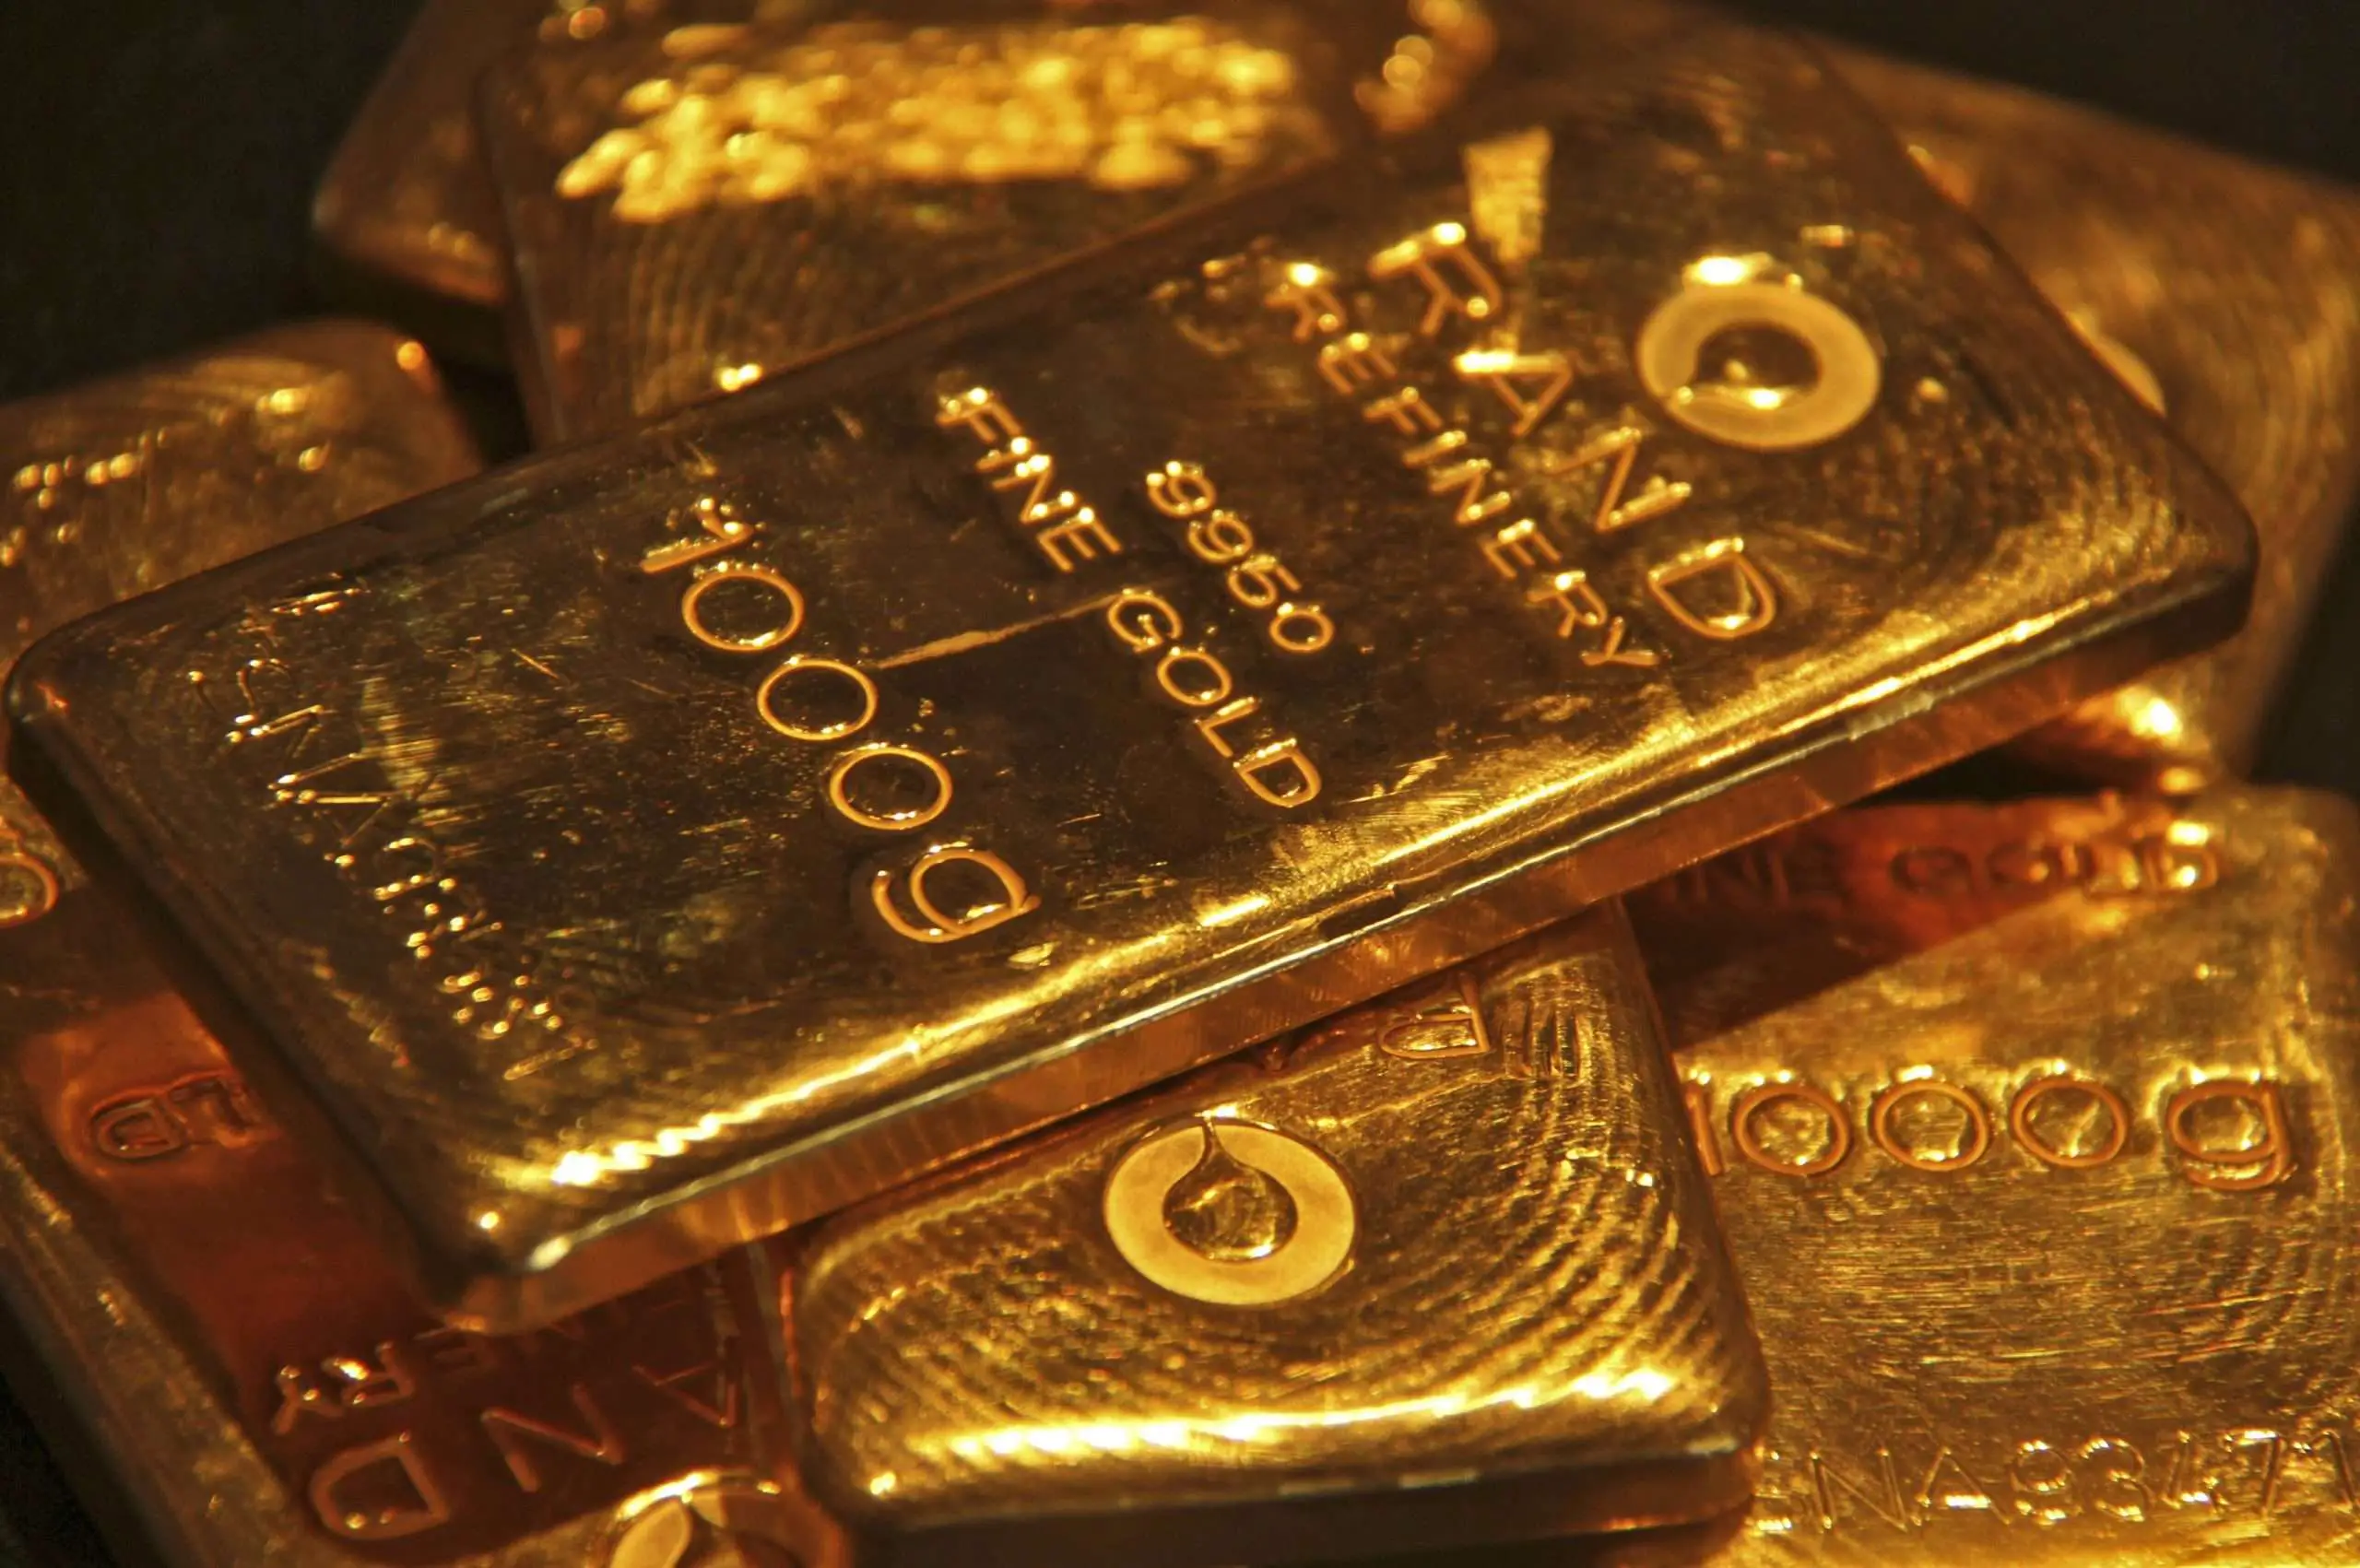 Gold bullion, ingots, bars and coins